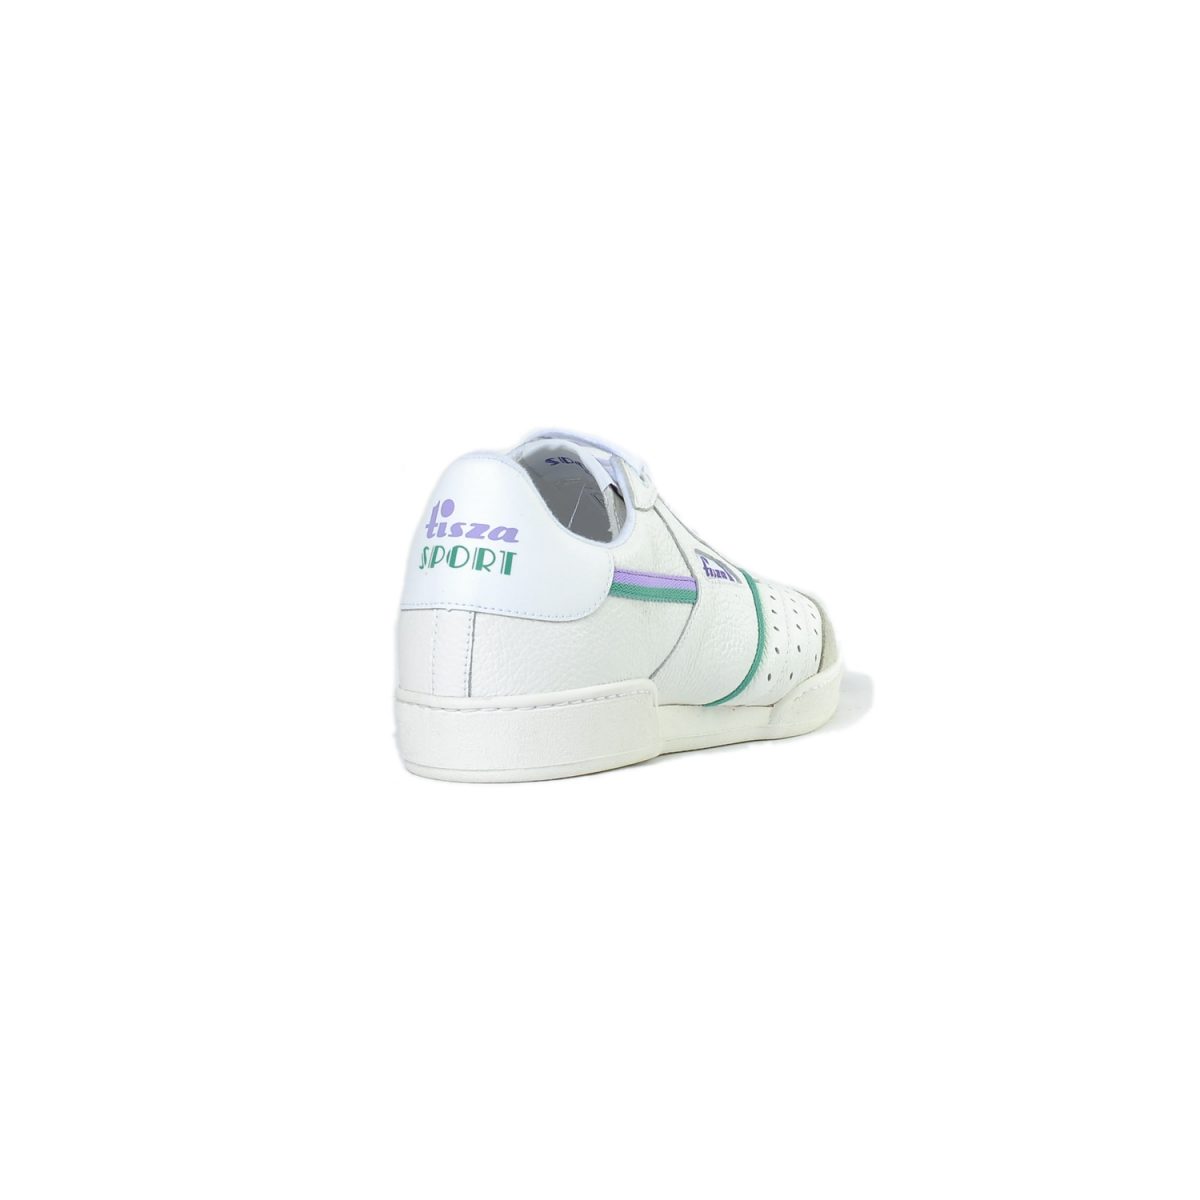 Tisza cipő - Sport - Fehér-lila-zöld